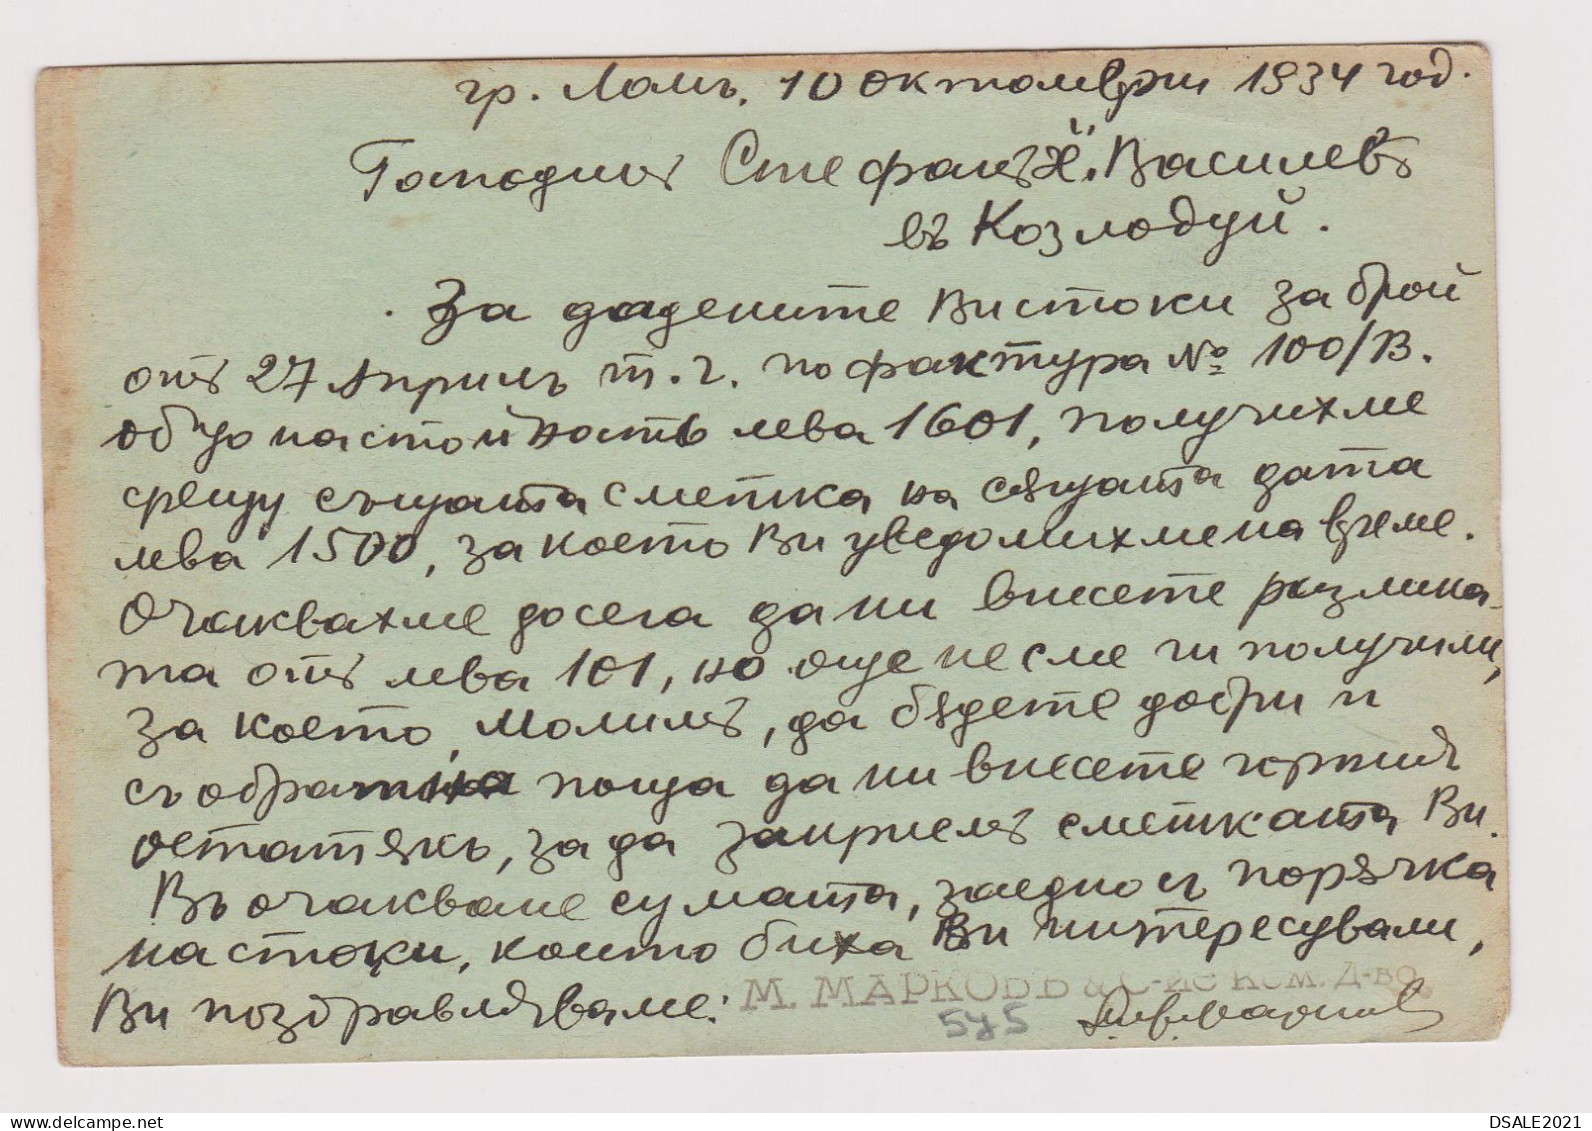 Bulgaria Bulgarie Bulgarian Postal Stationery Card, 1934 Sent Via Railway TPO Zug Bahnpost (LOM-BRUSARTZI) (575) - Postales